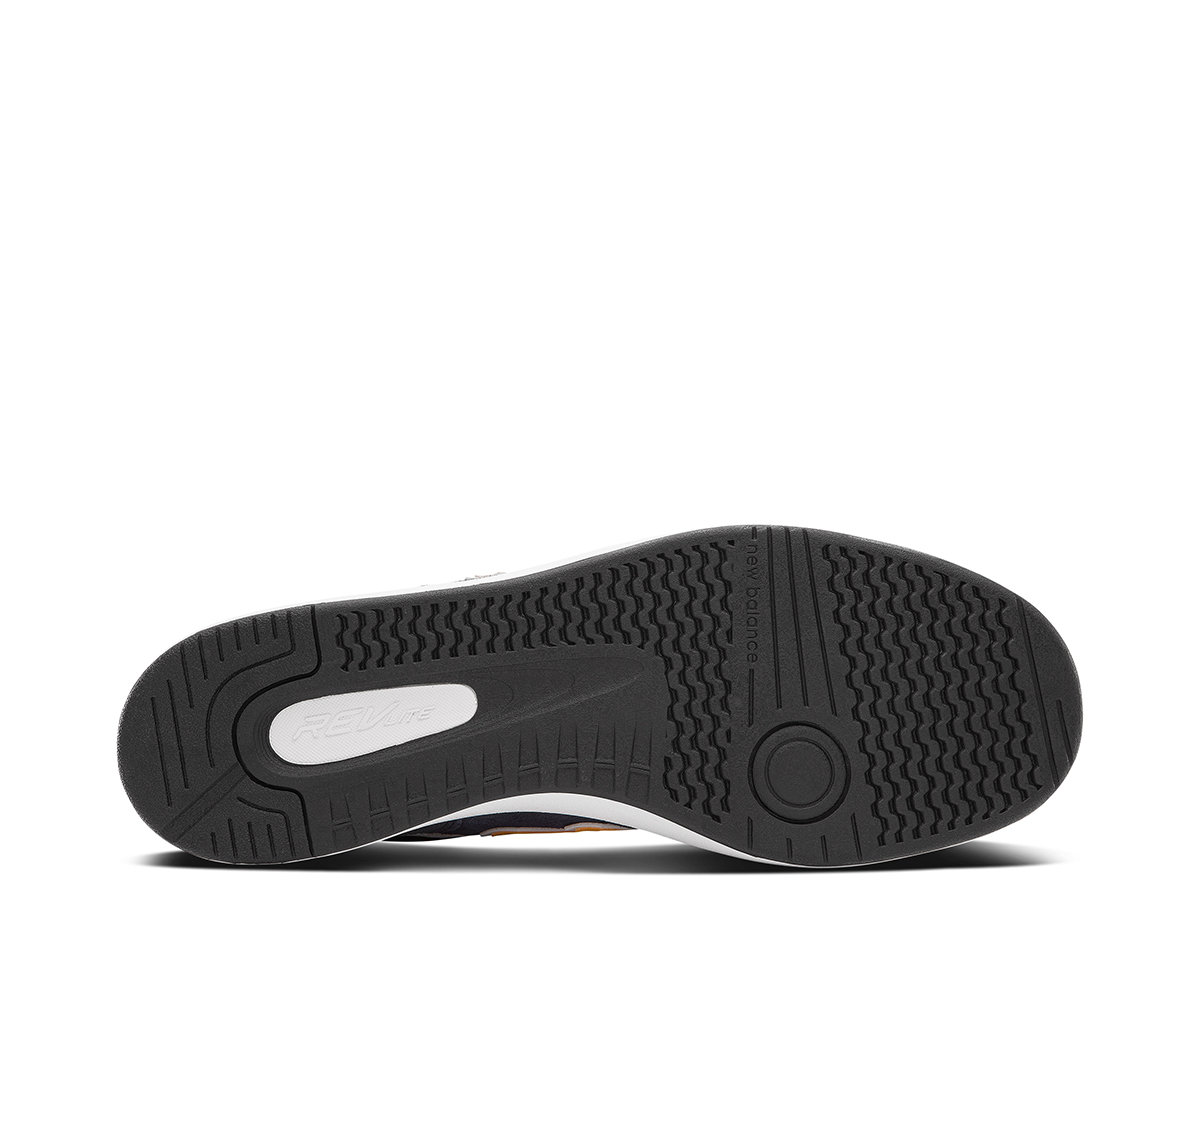 New Balance AM574 - Skate - Navy sole